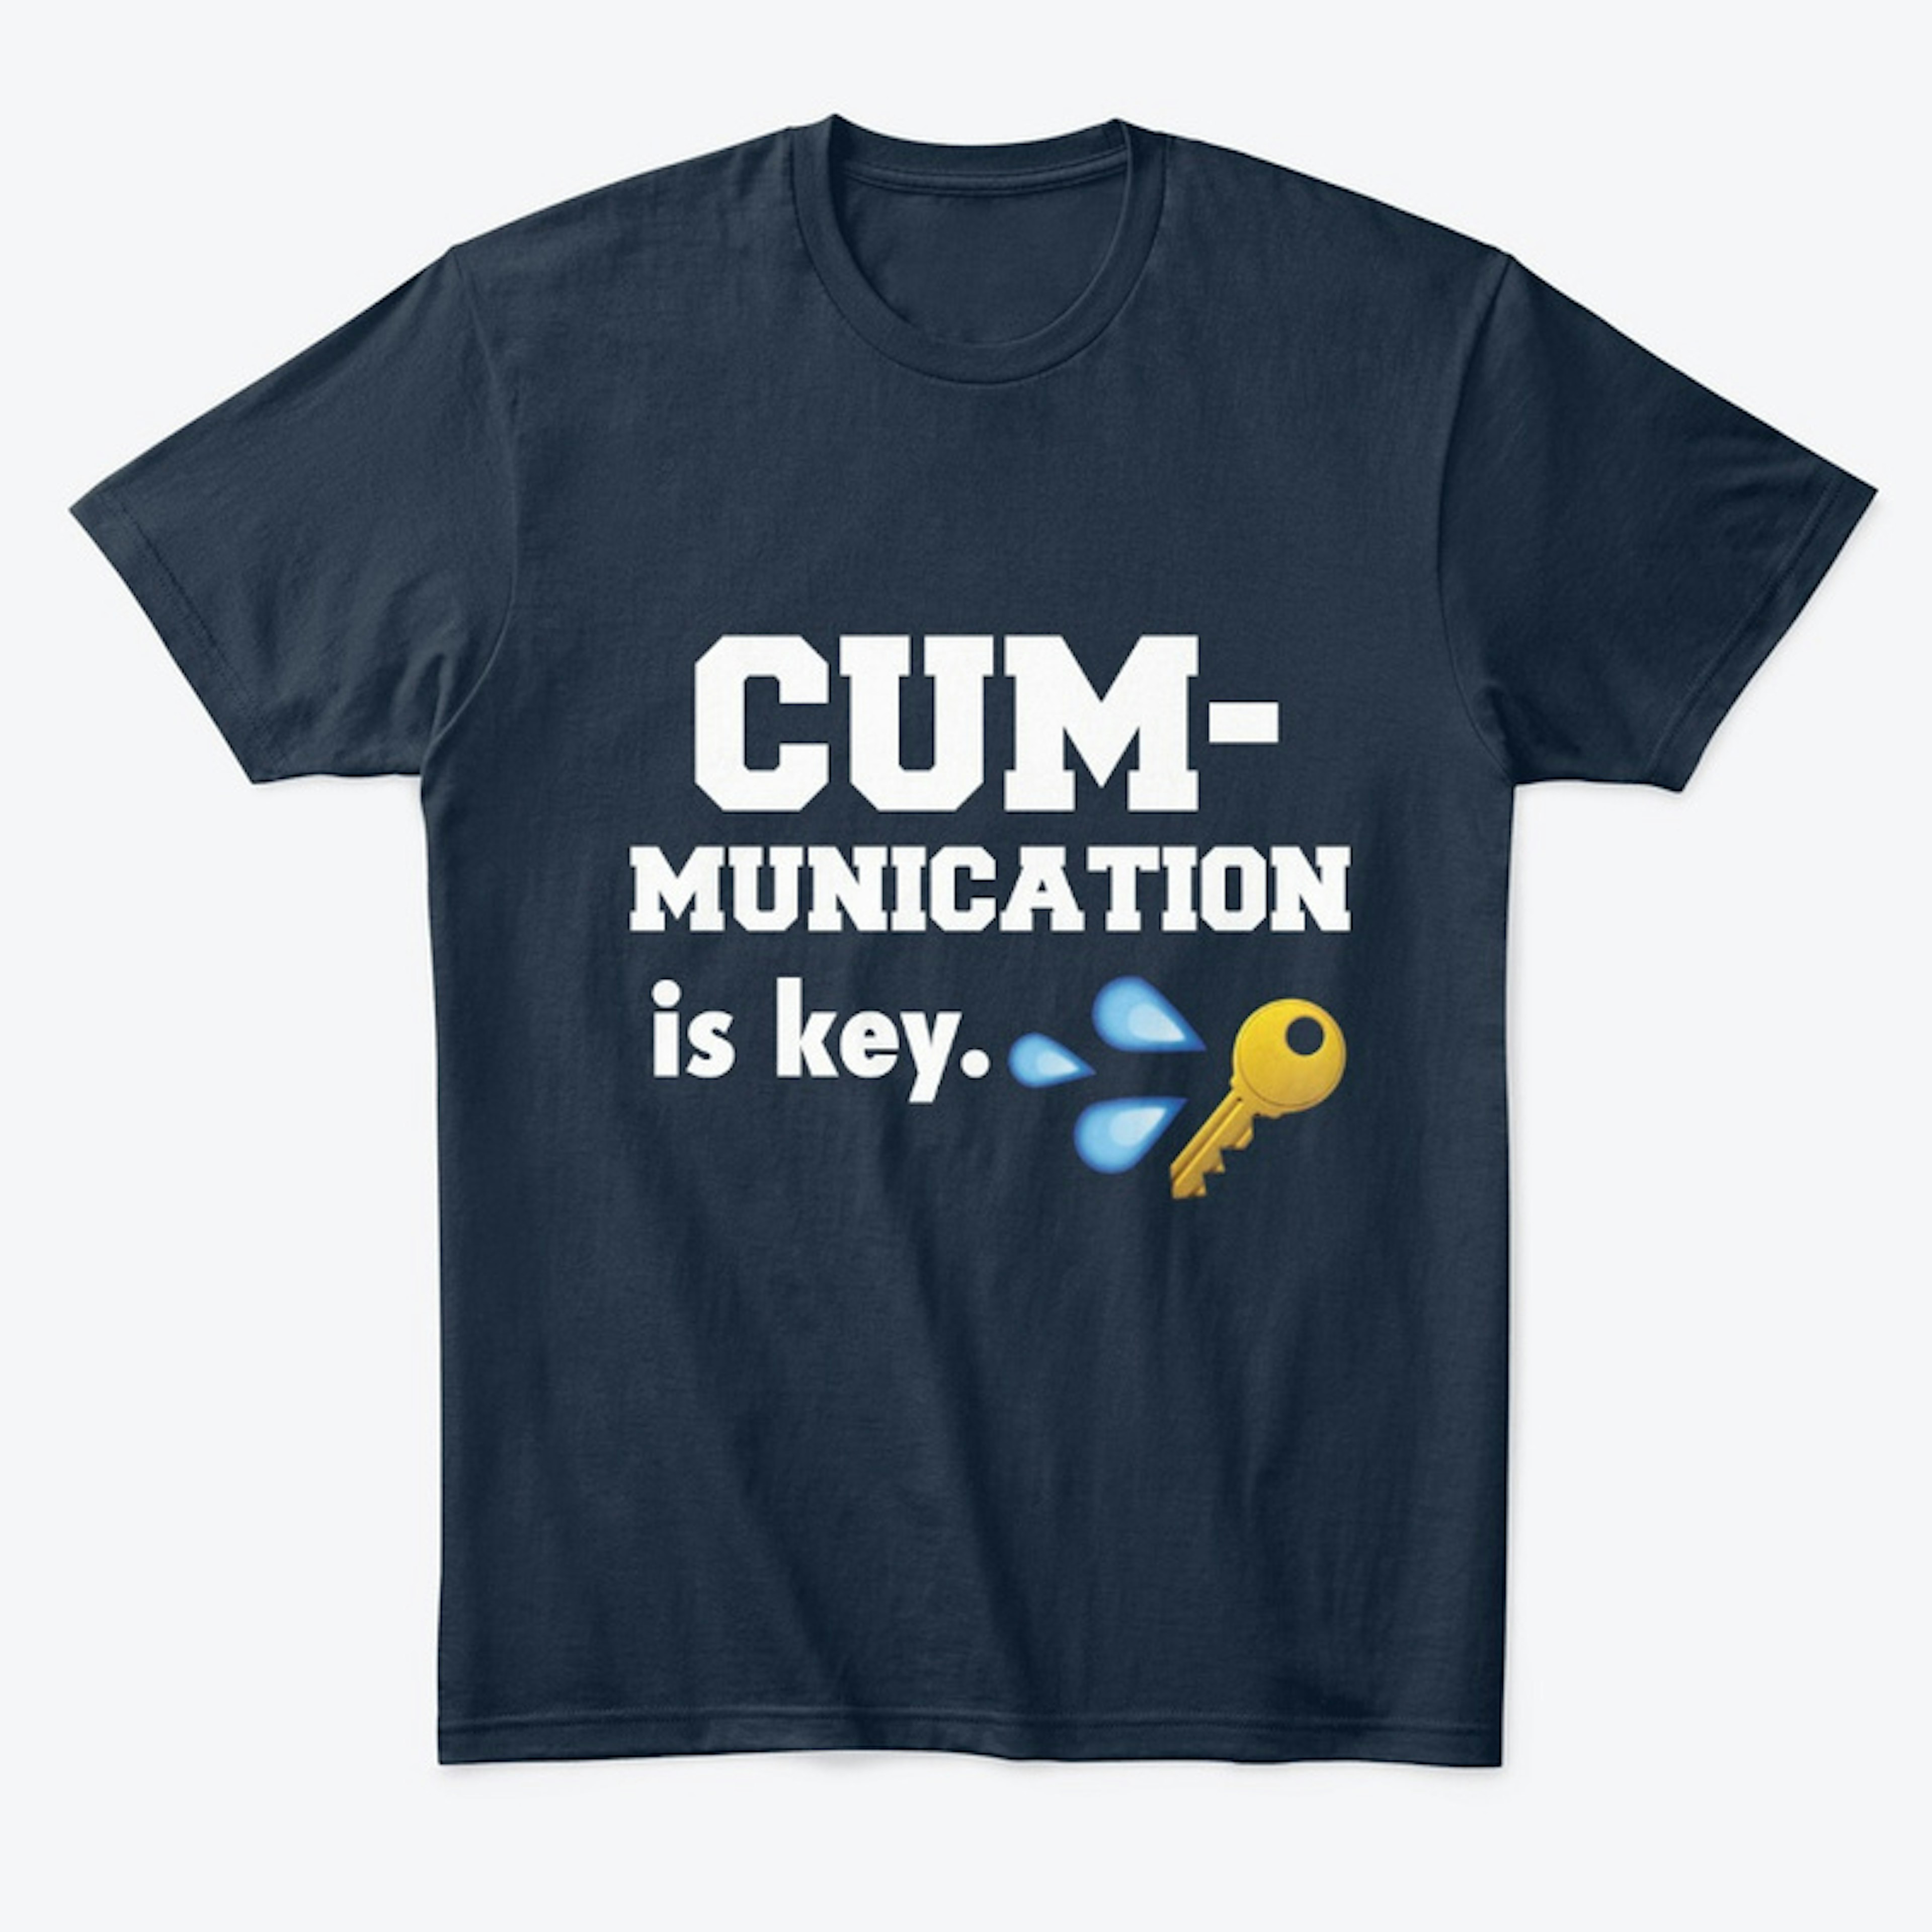 Cum-munication is Key